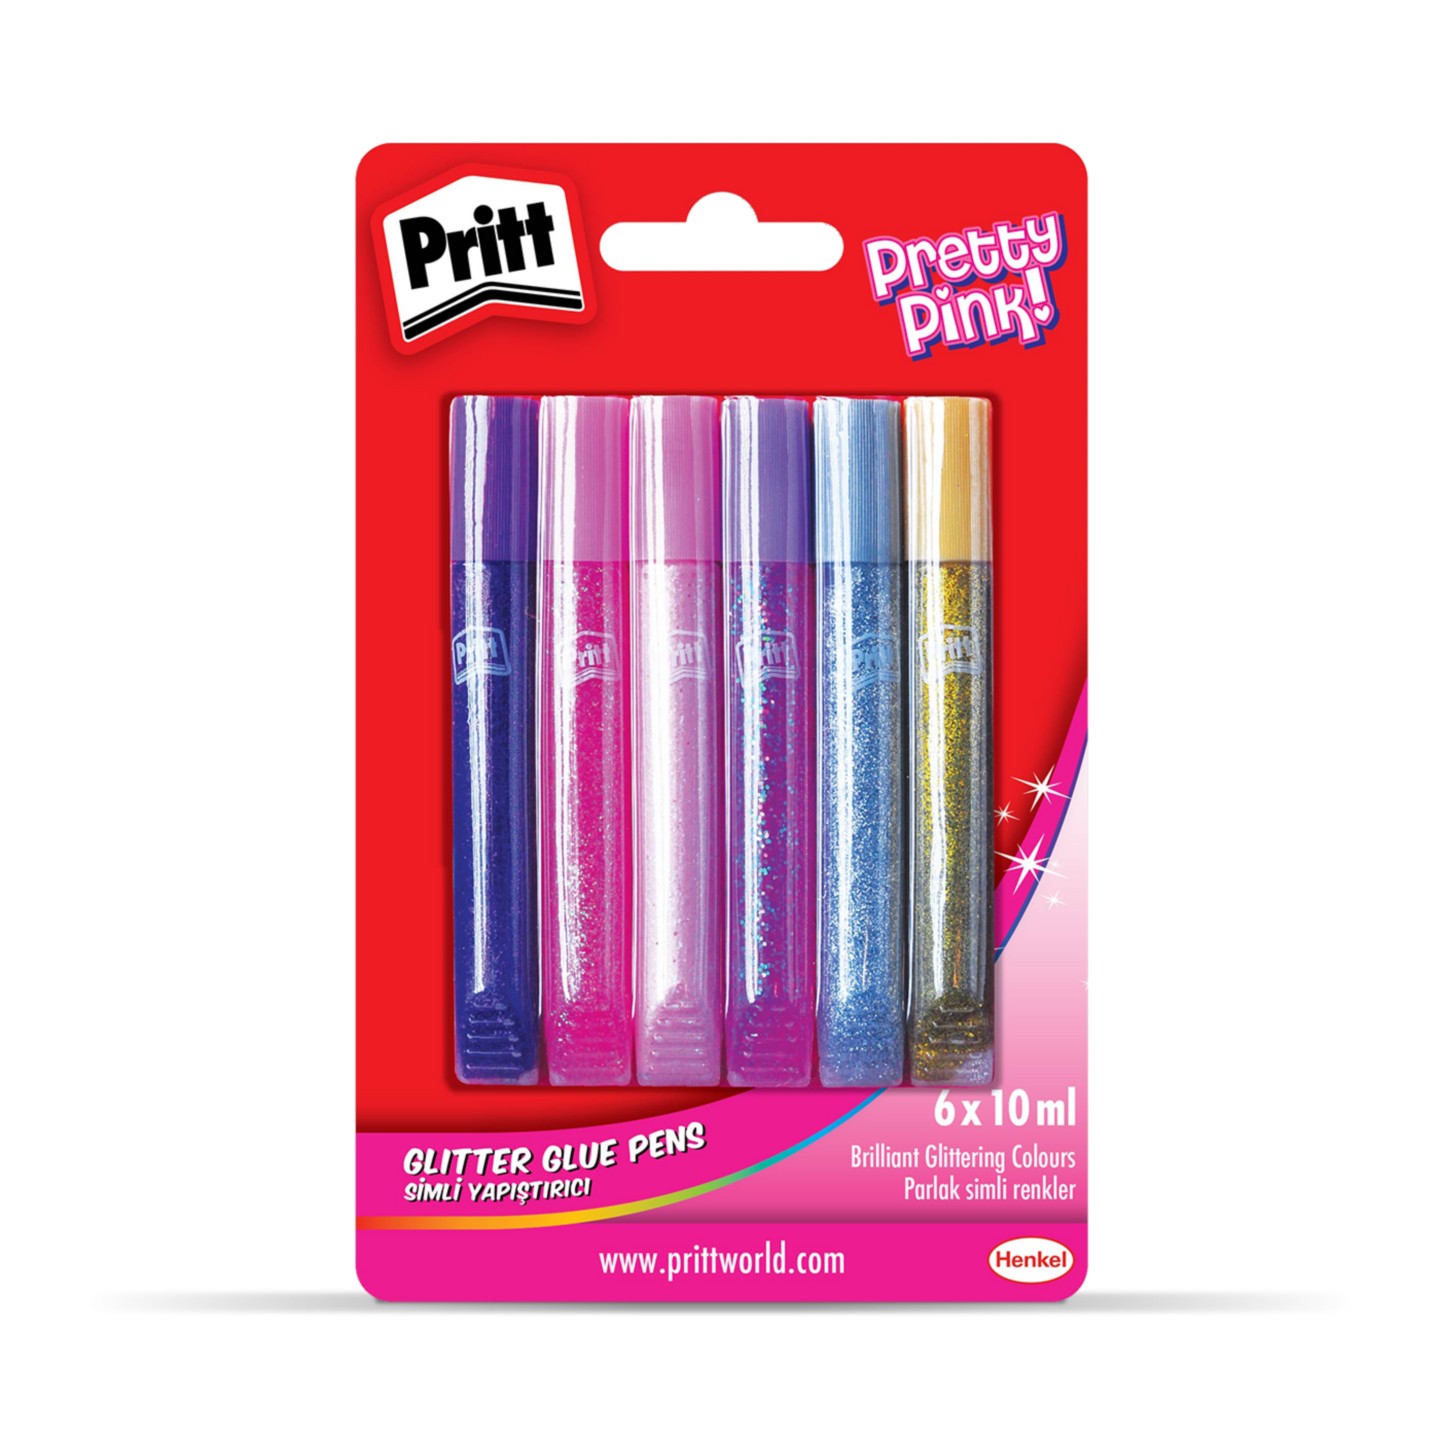 Pritt Glitter Glue Pens - Pritt